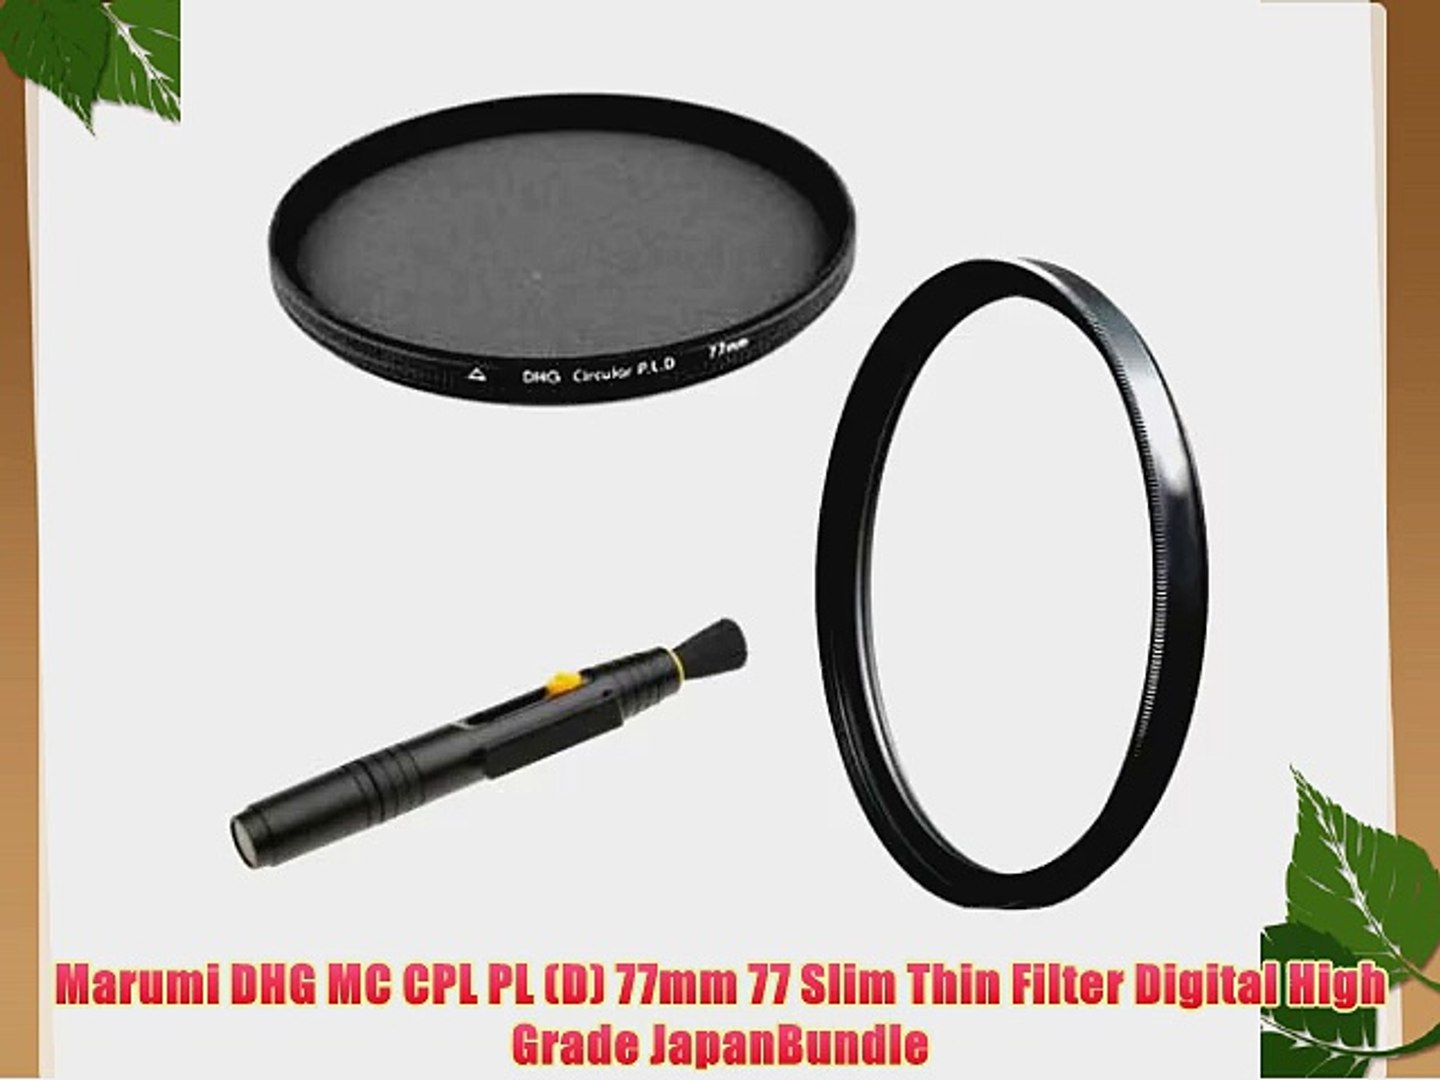 Marumi DHG MC CPL PL D 77mm 77 Slim Thin Filter Digital High Grade Japan